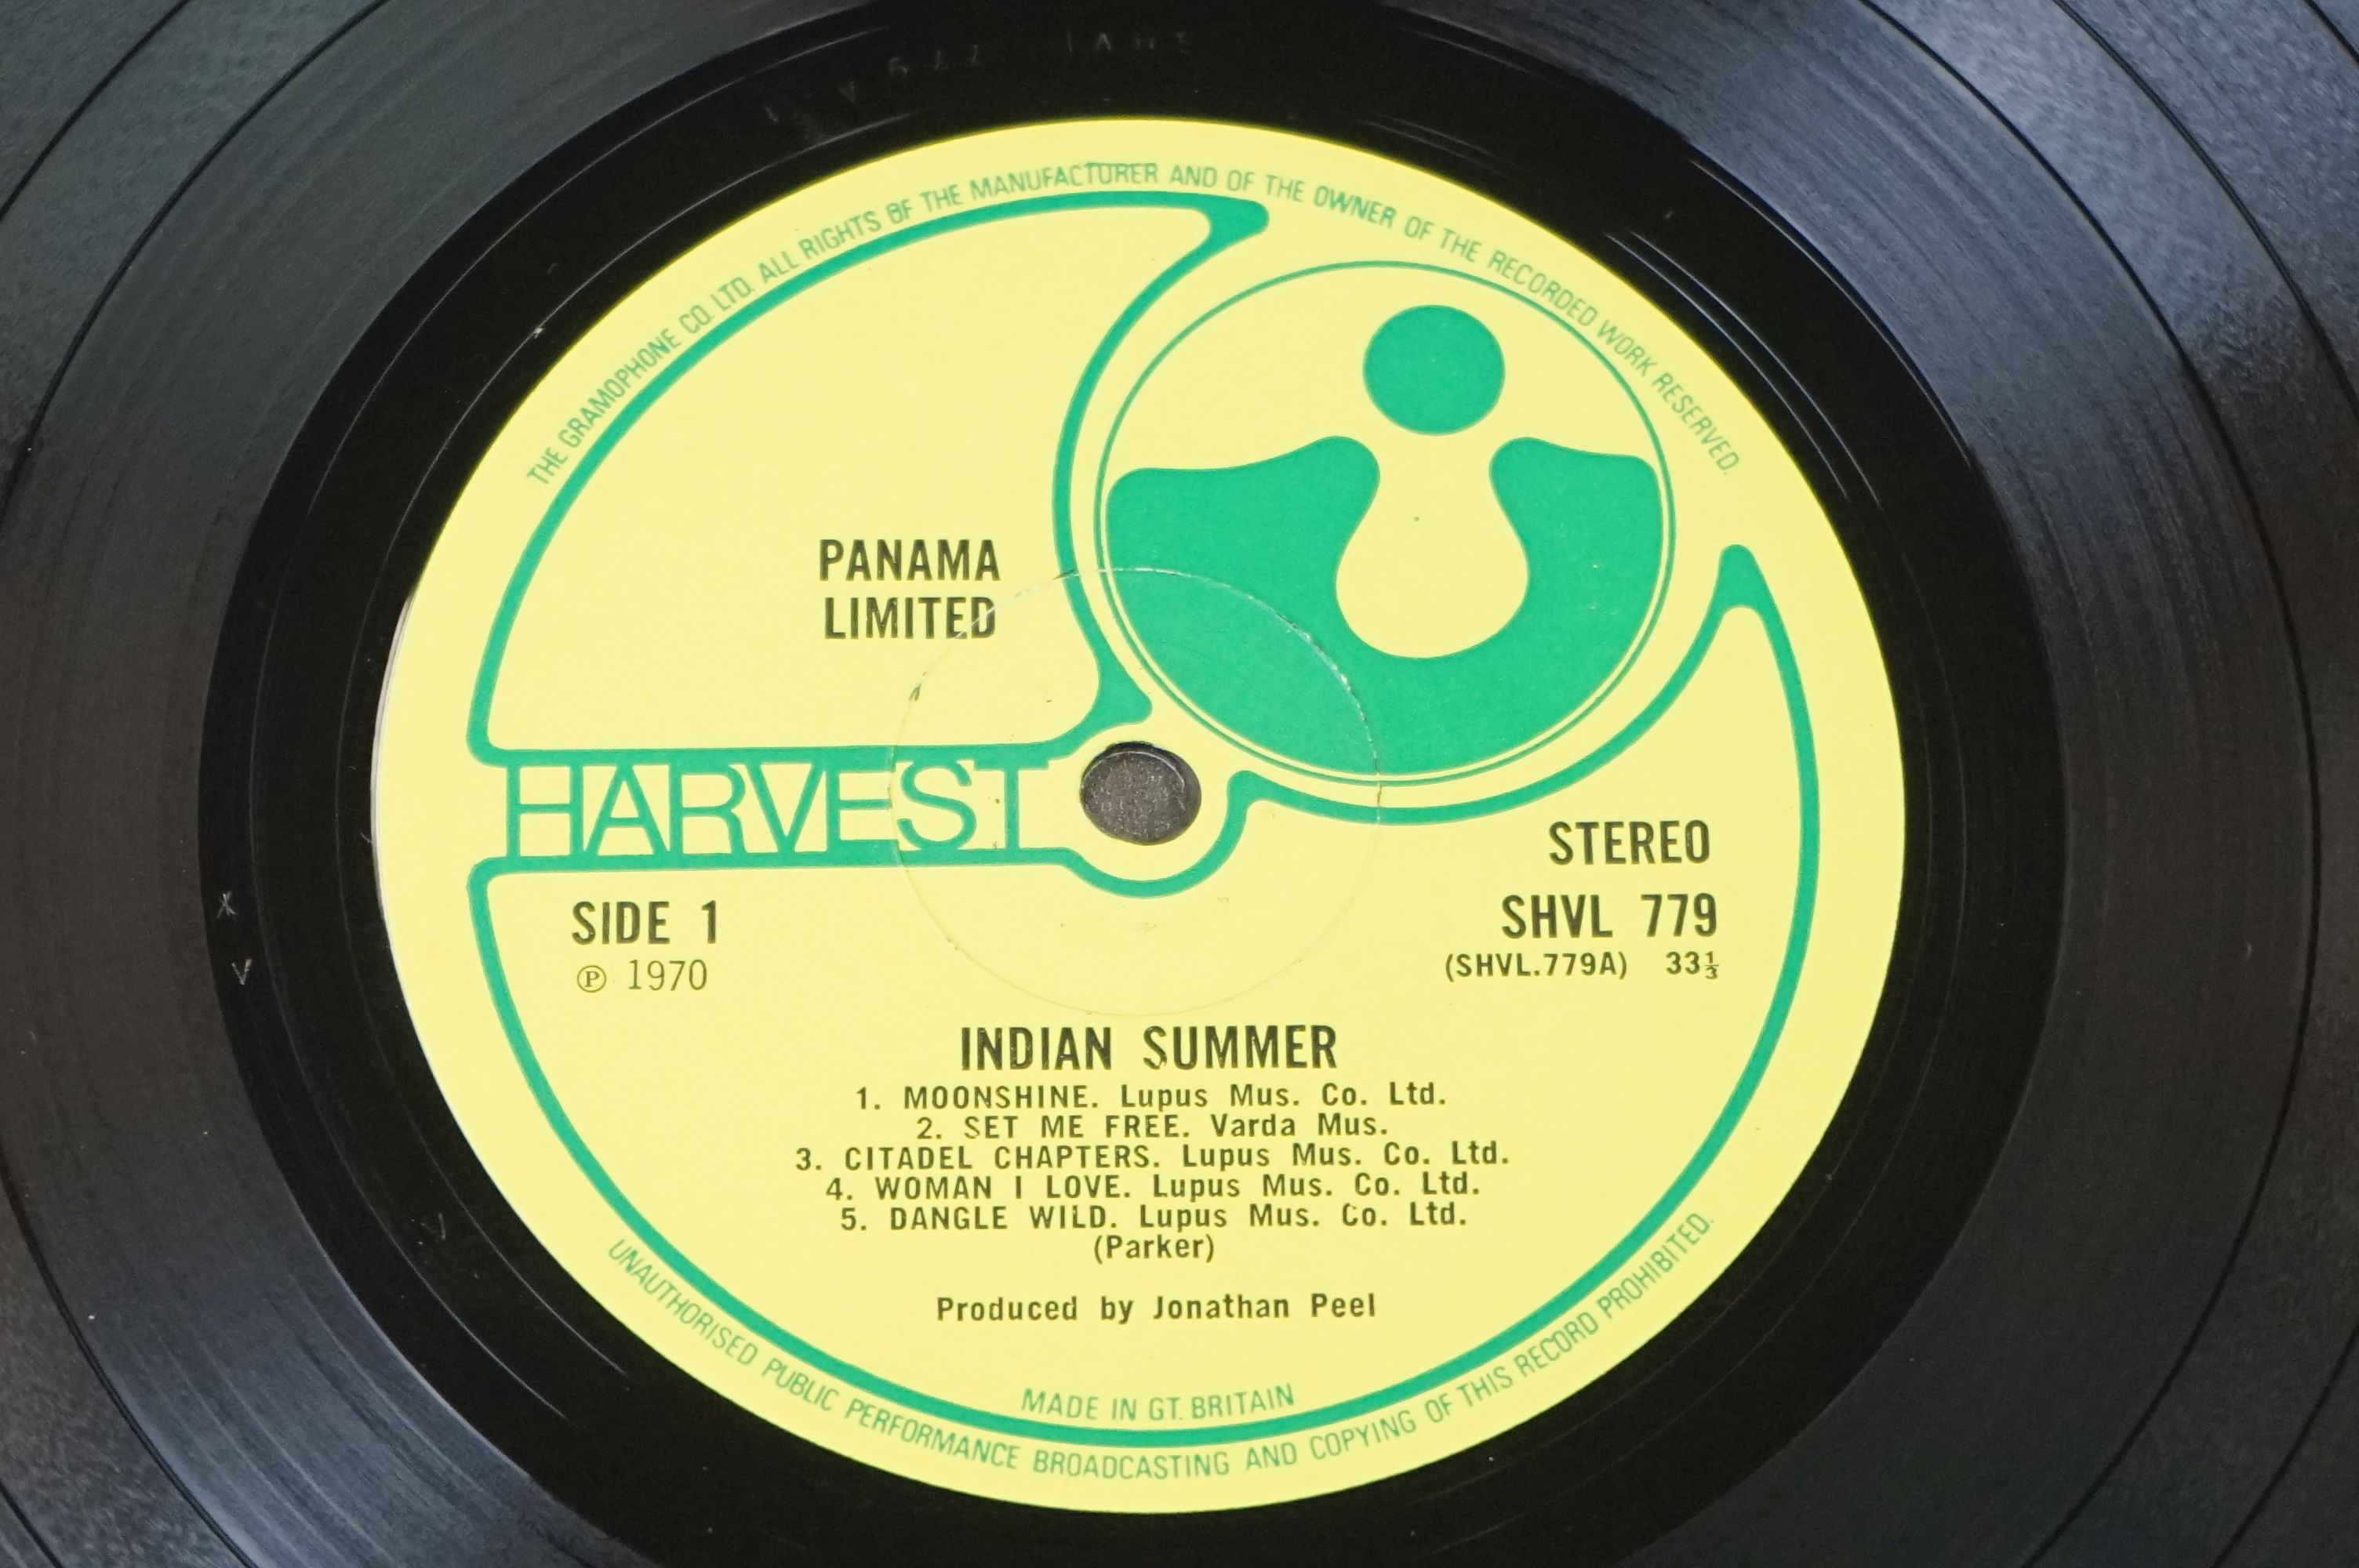 Vinyl - Panama Limited – Indian Summer, original UK 1970 1st pressing, no EMI box, Harvest records - Image 3 of 7